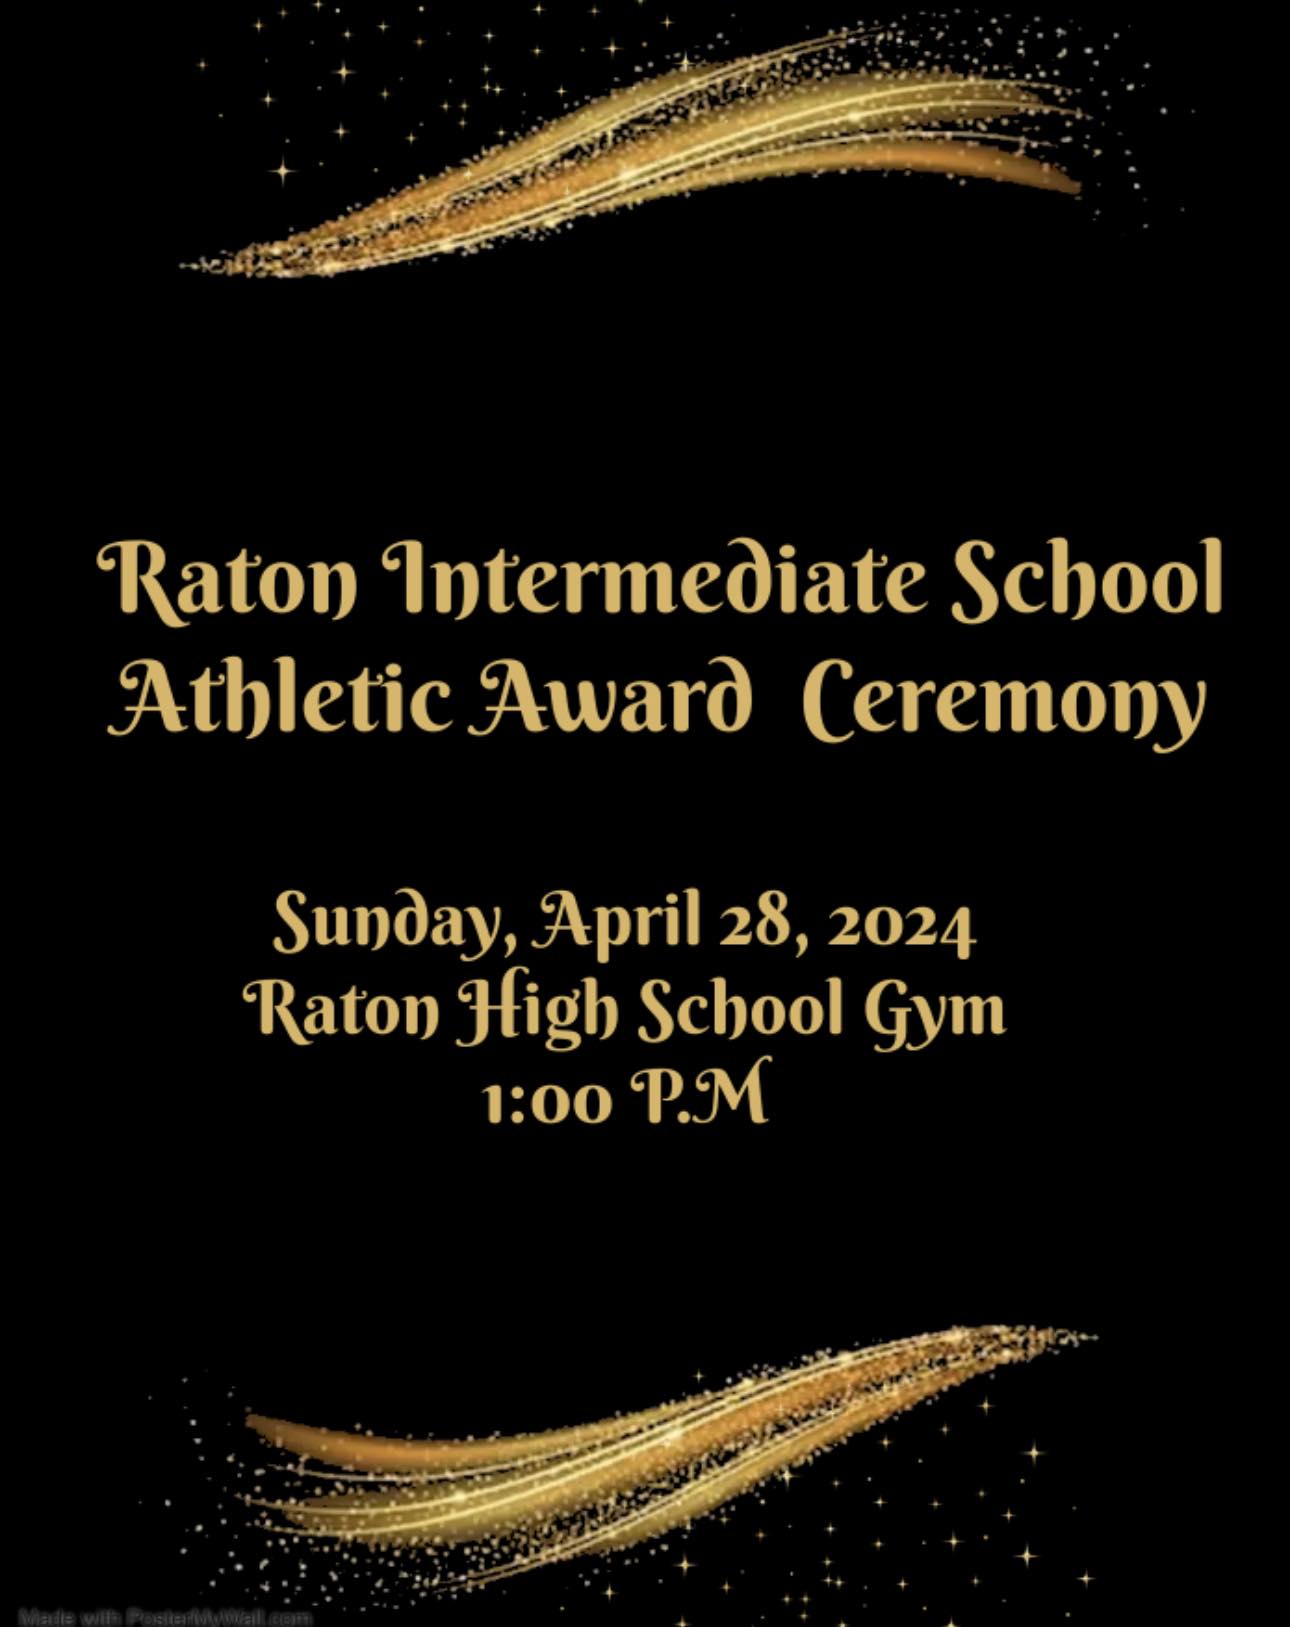 Raton Intermediate School hosts Athletic Awards Ceremony